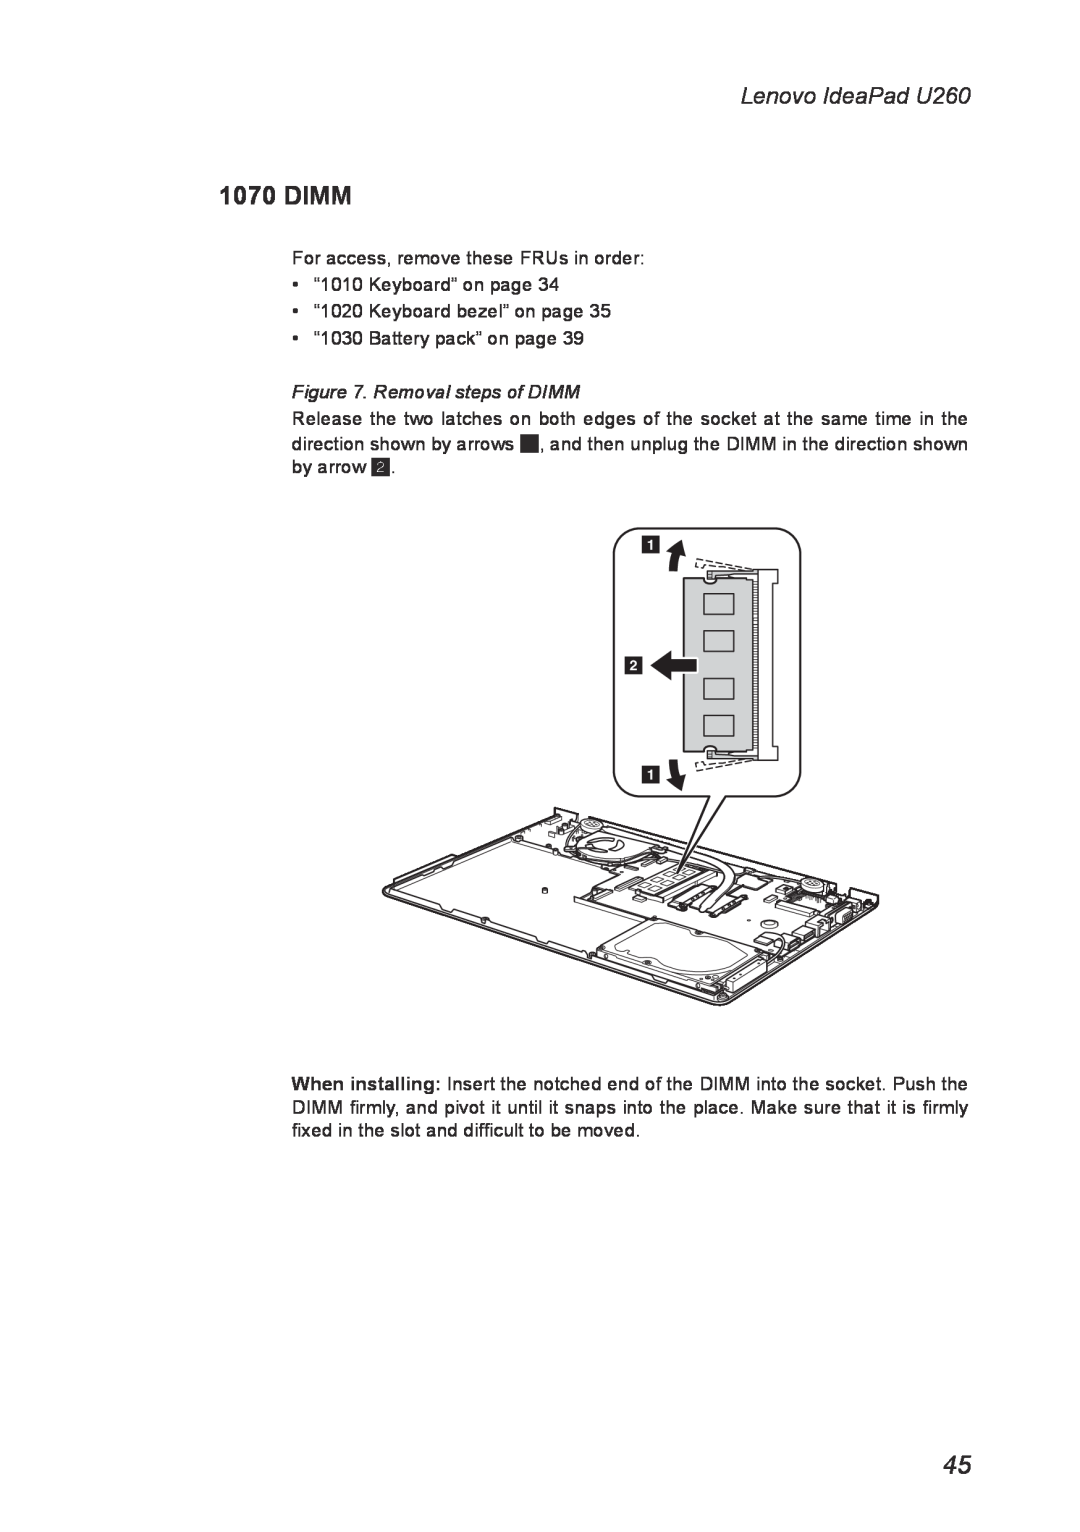 Lenovo manual Dimm, Removal steps of DIMM, Lenovo IdeaPad U260 